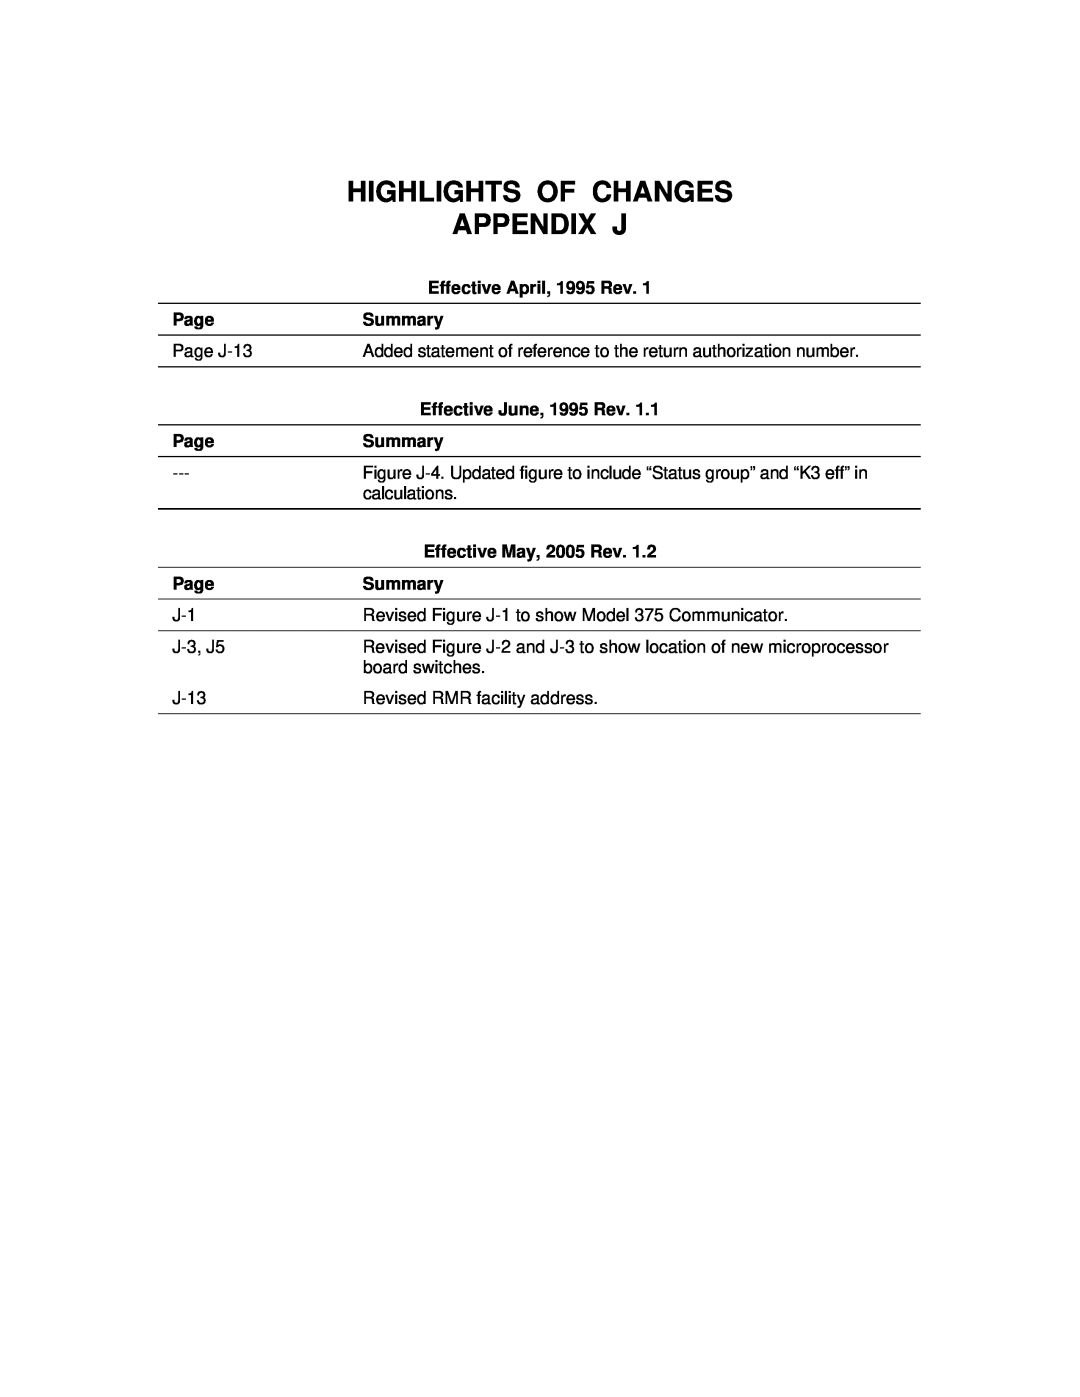 Emerson 3000 Appendix J, Highlights Of Changes, Effective April, 1995 Rev, Page, Summary, Effective June, 1995 Rev 